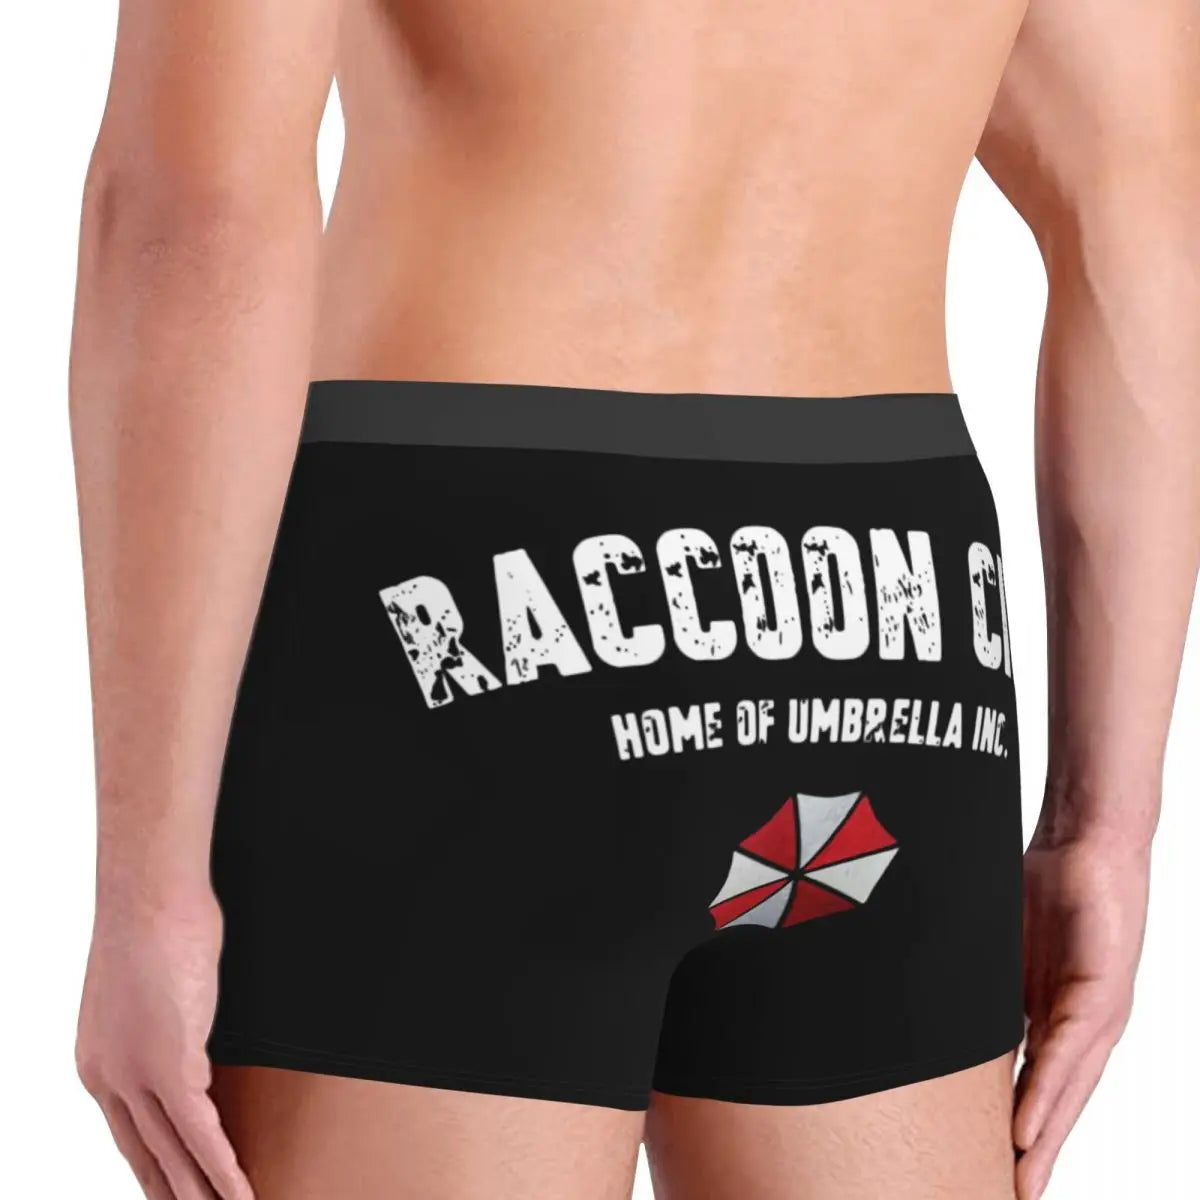 Novedad masculina Raccoon City Home Of Umbrella Corporation Corp Ropa interior Videojuego Boxer Calzoncillos Pantalones cortos elásticos Bragas Calzoncillos